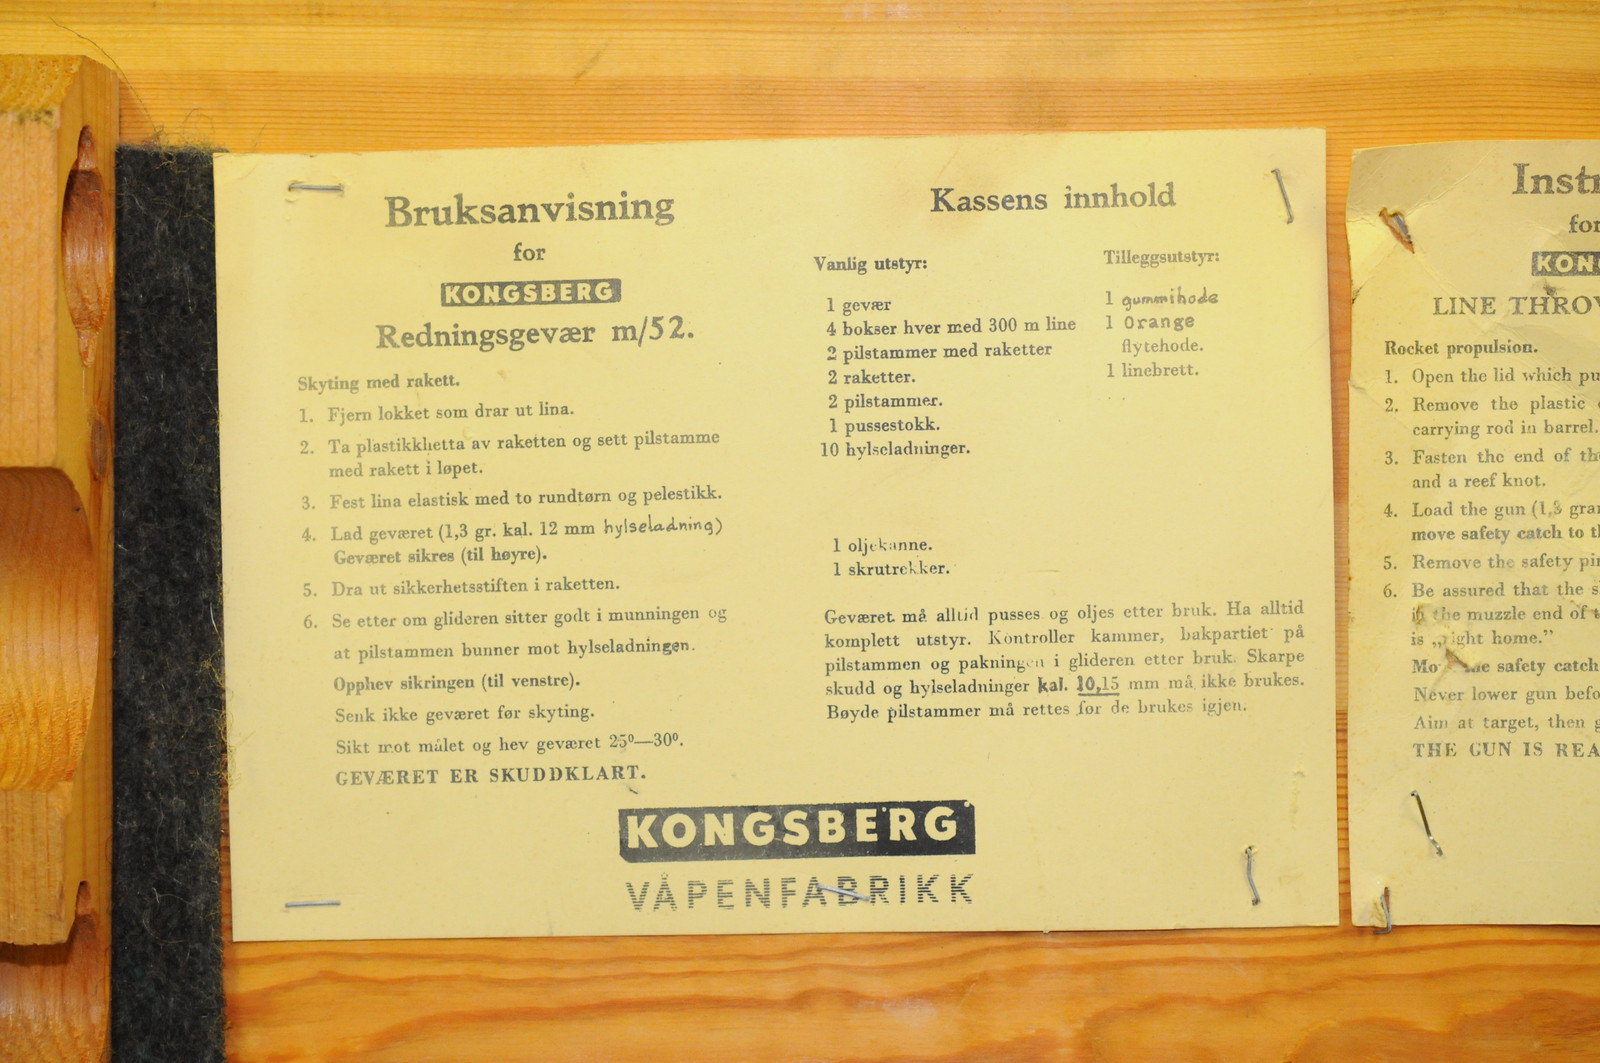 ./guns/fangst/bilder/Fangst-Kongsberg-M52-Redningskasse-7.jpg